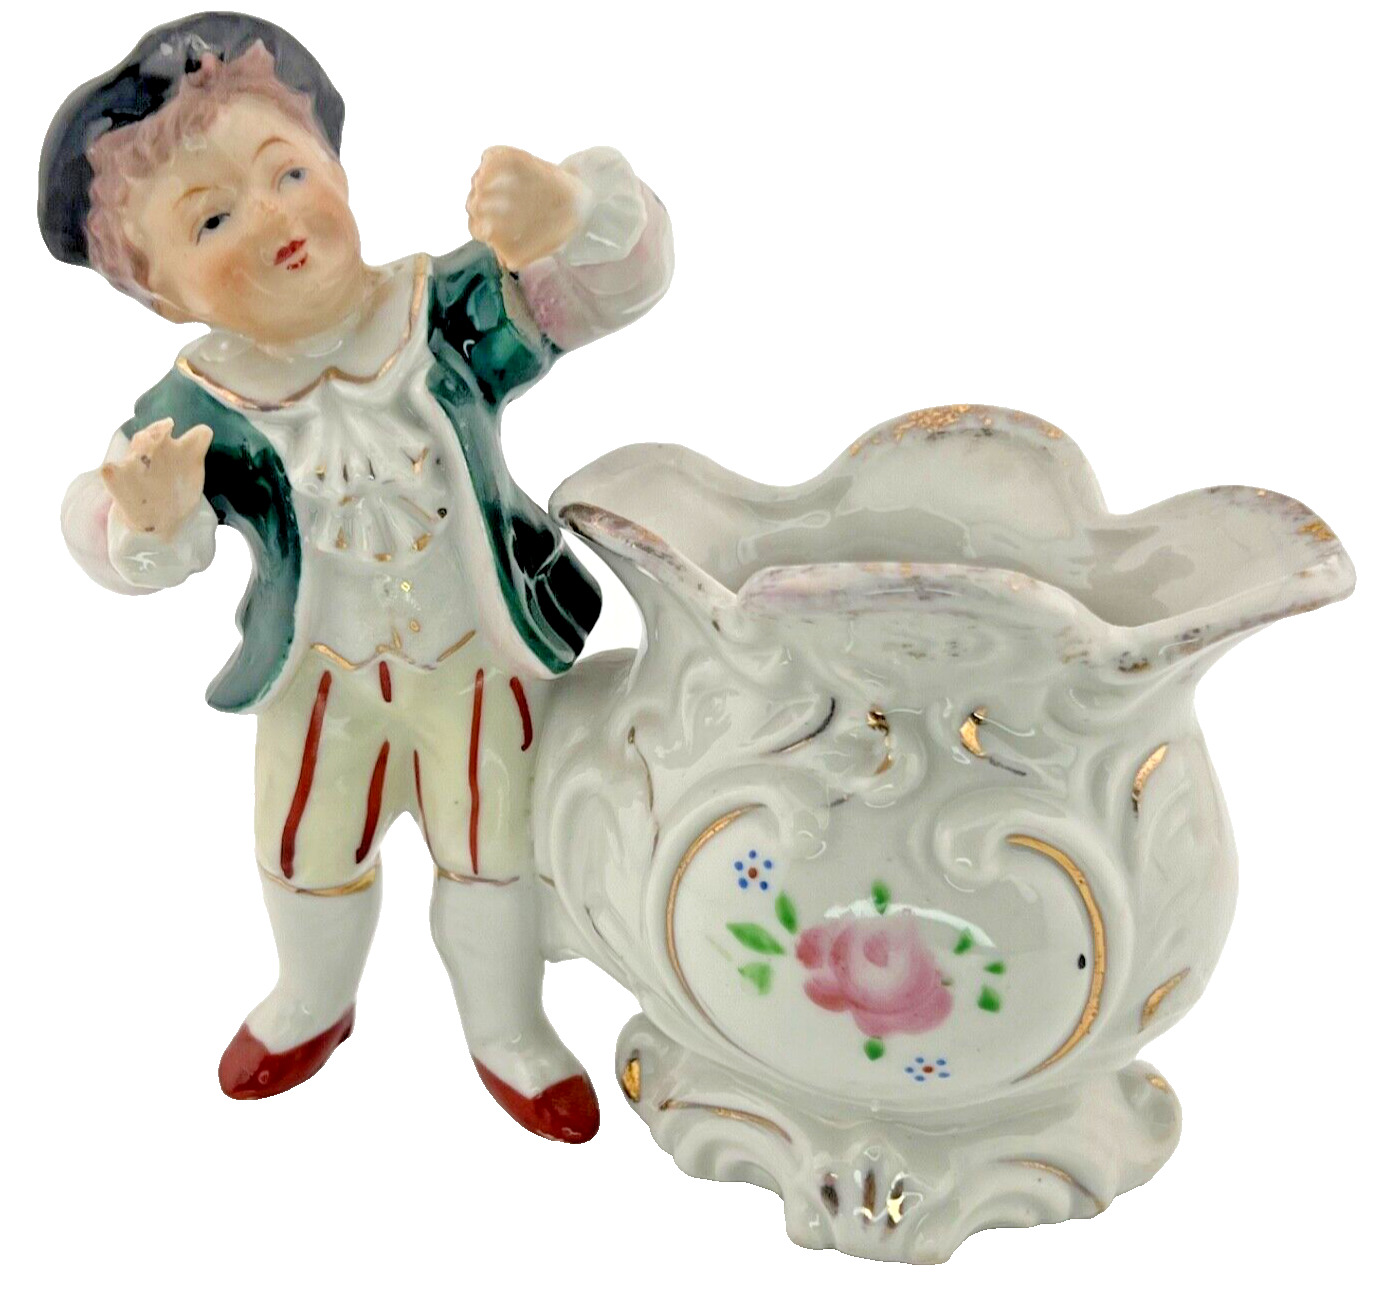 Vintage WALES Ceramic Porcelain Surprised Boy Child & Pot Planter, JAPAN